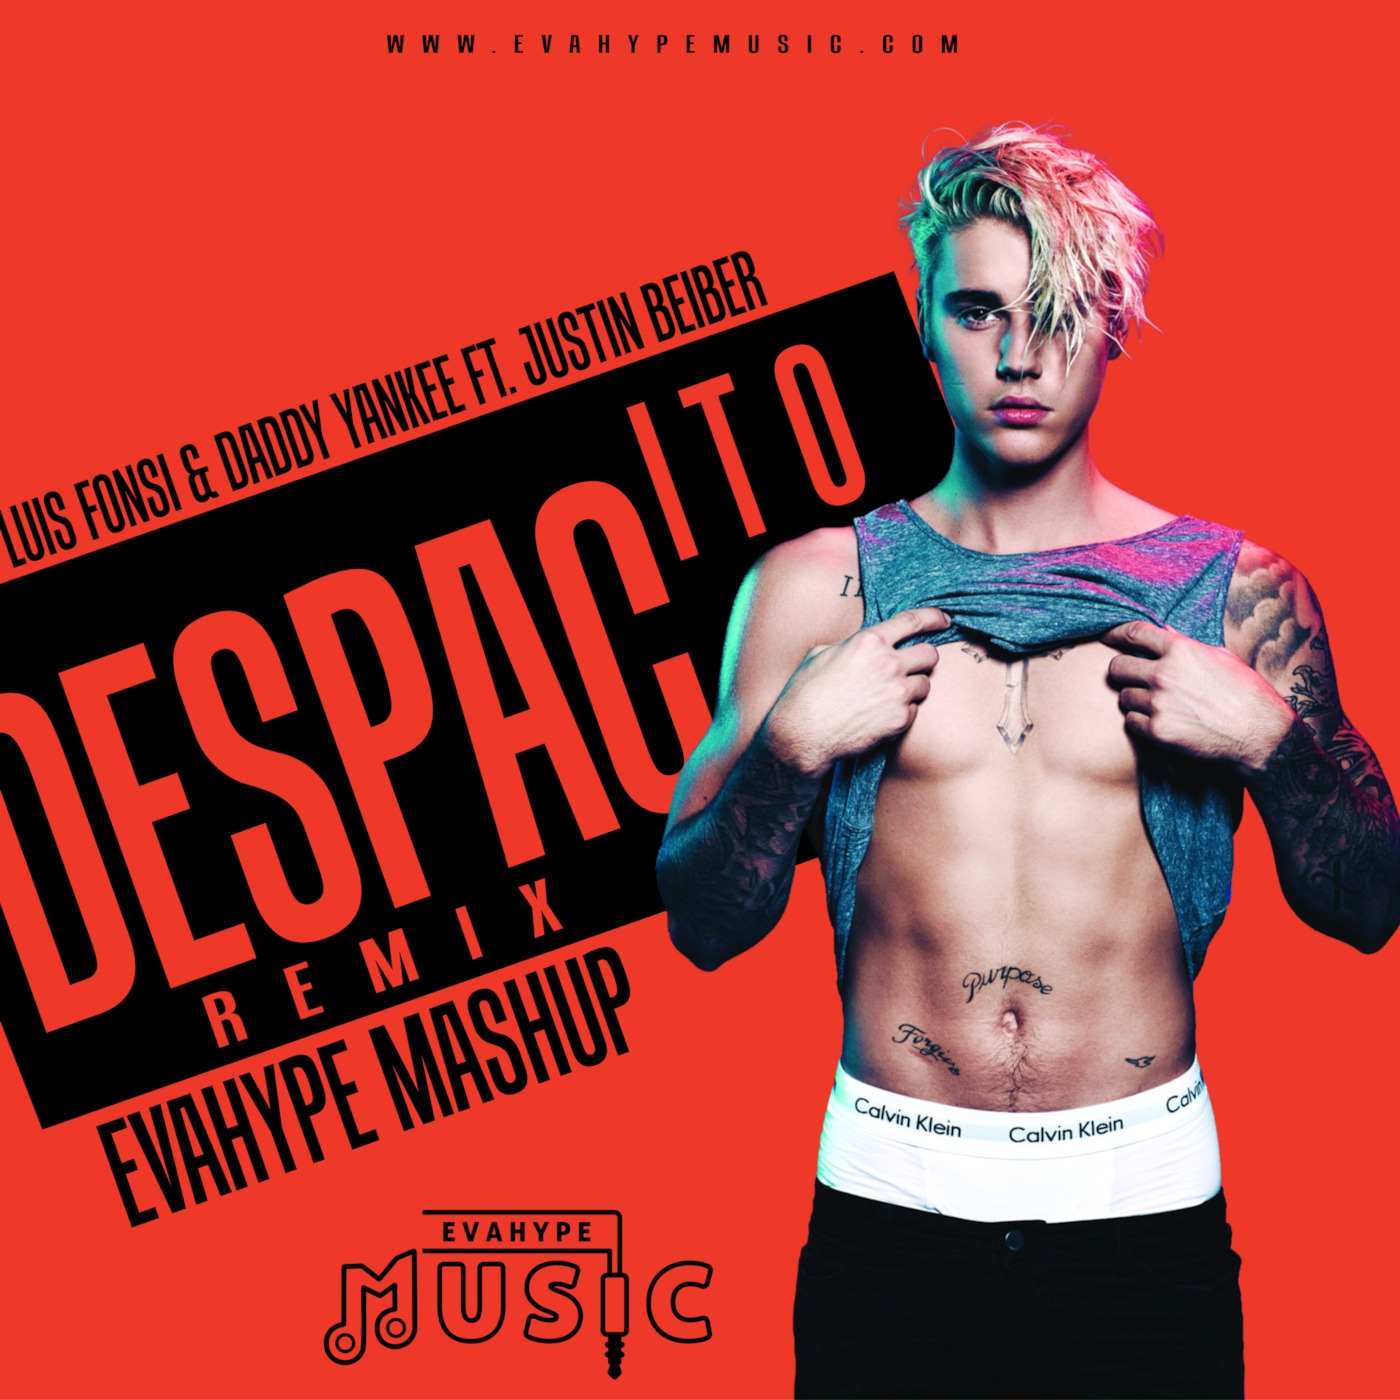 SÓ OS CAMBITO  PARÓDIA Luis Fonsi, Daddy Yankee - Despacito (Audio) ft.  Justin Bieber Reação 